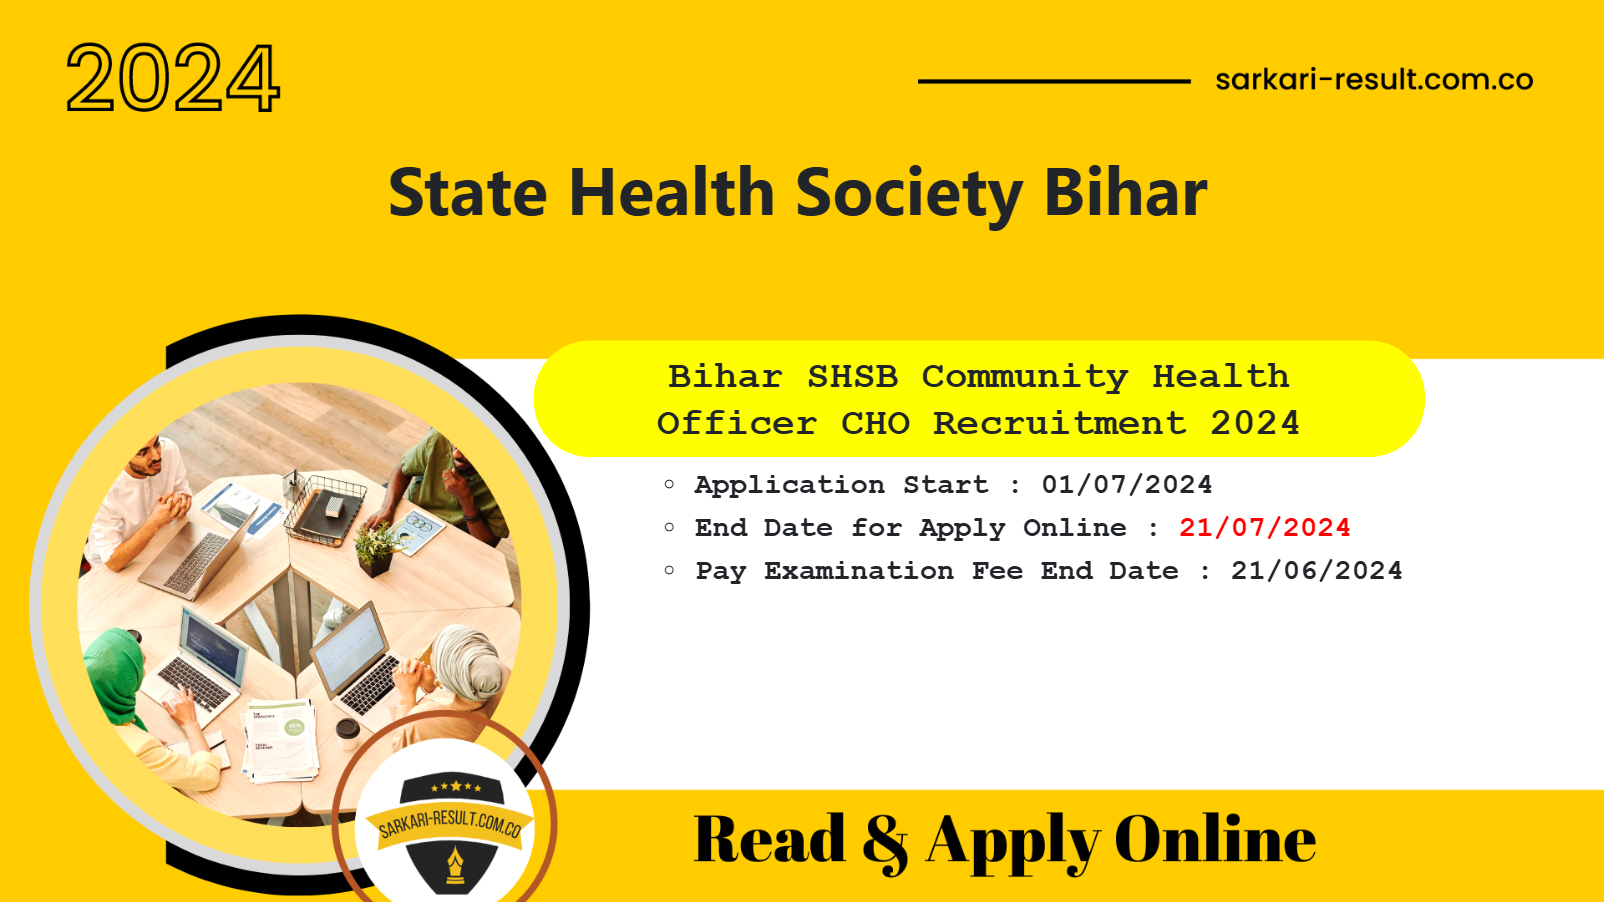 Bihar Community Health Officer CHO Online Form 2024 for 4500 Post